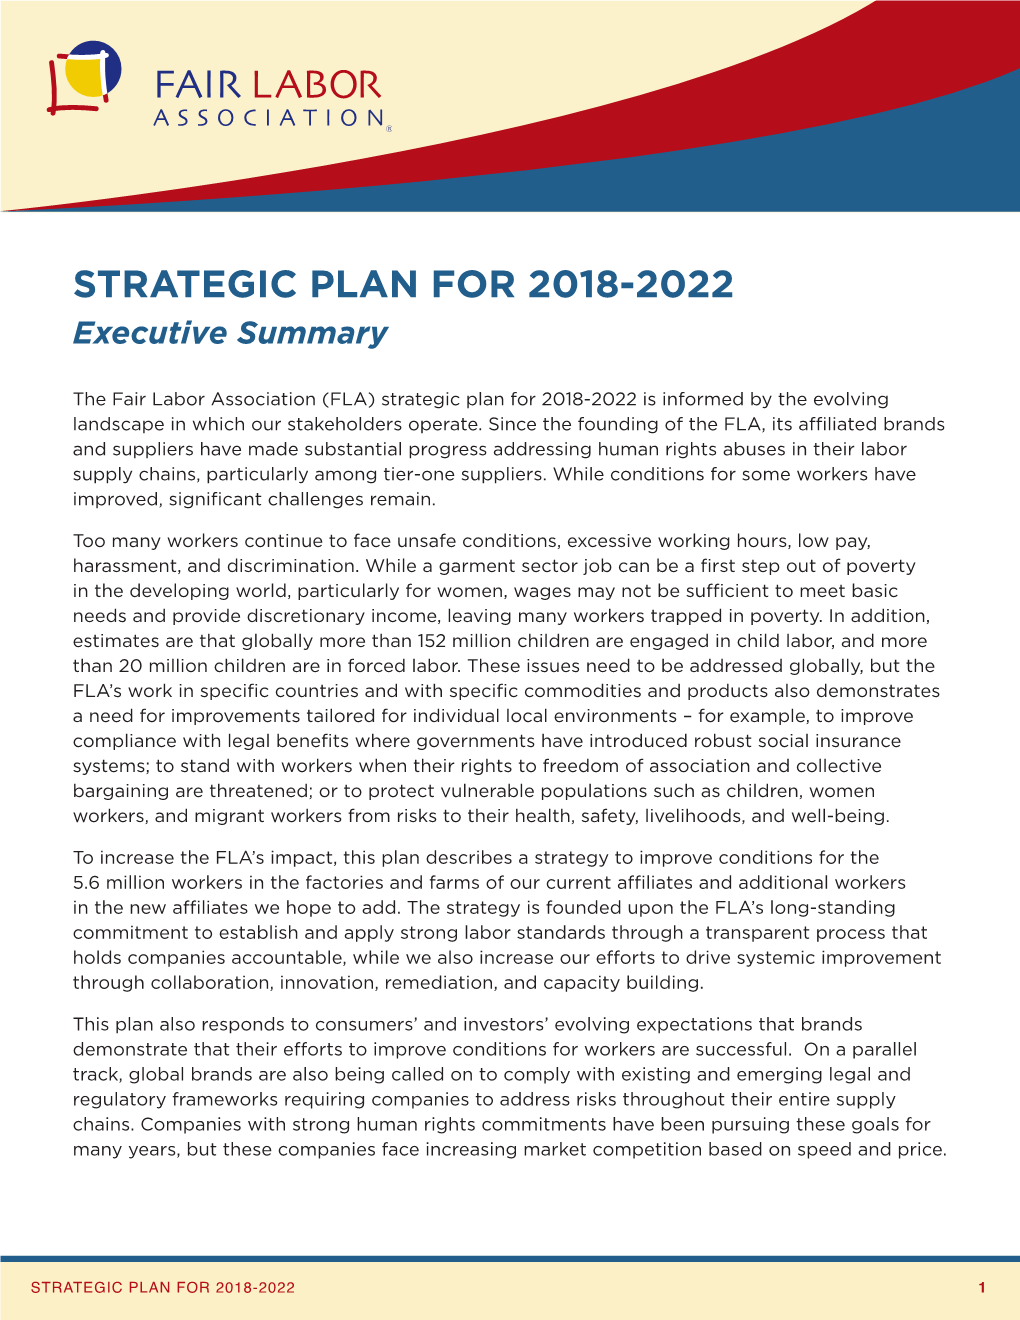 Strategic Plan for 2018-2022 Executive Summary